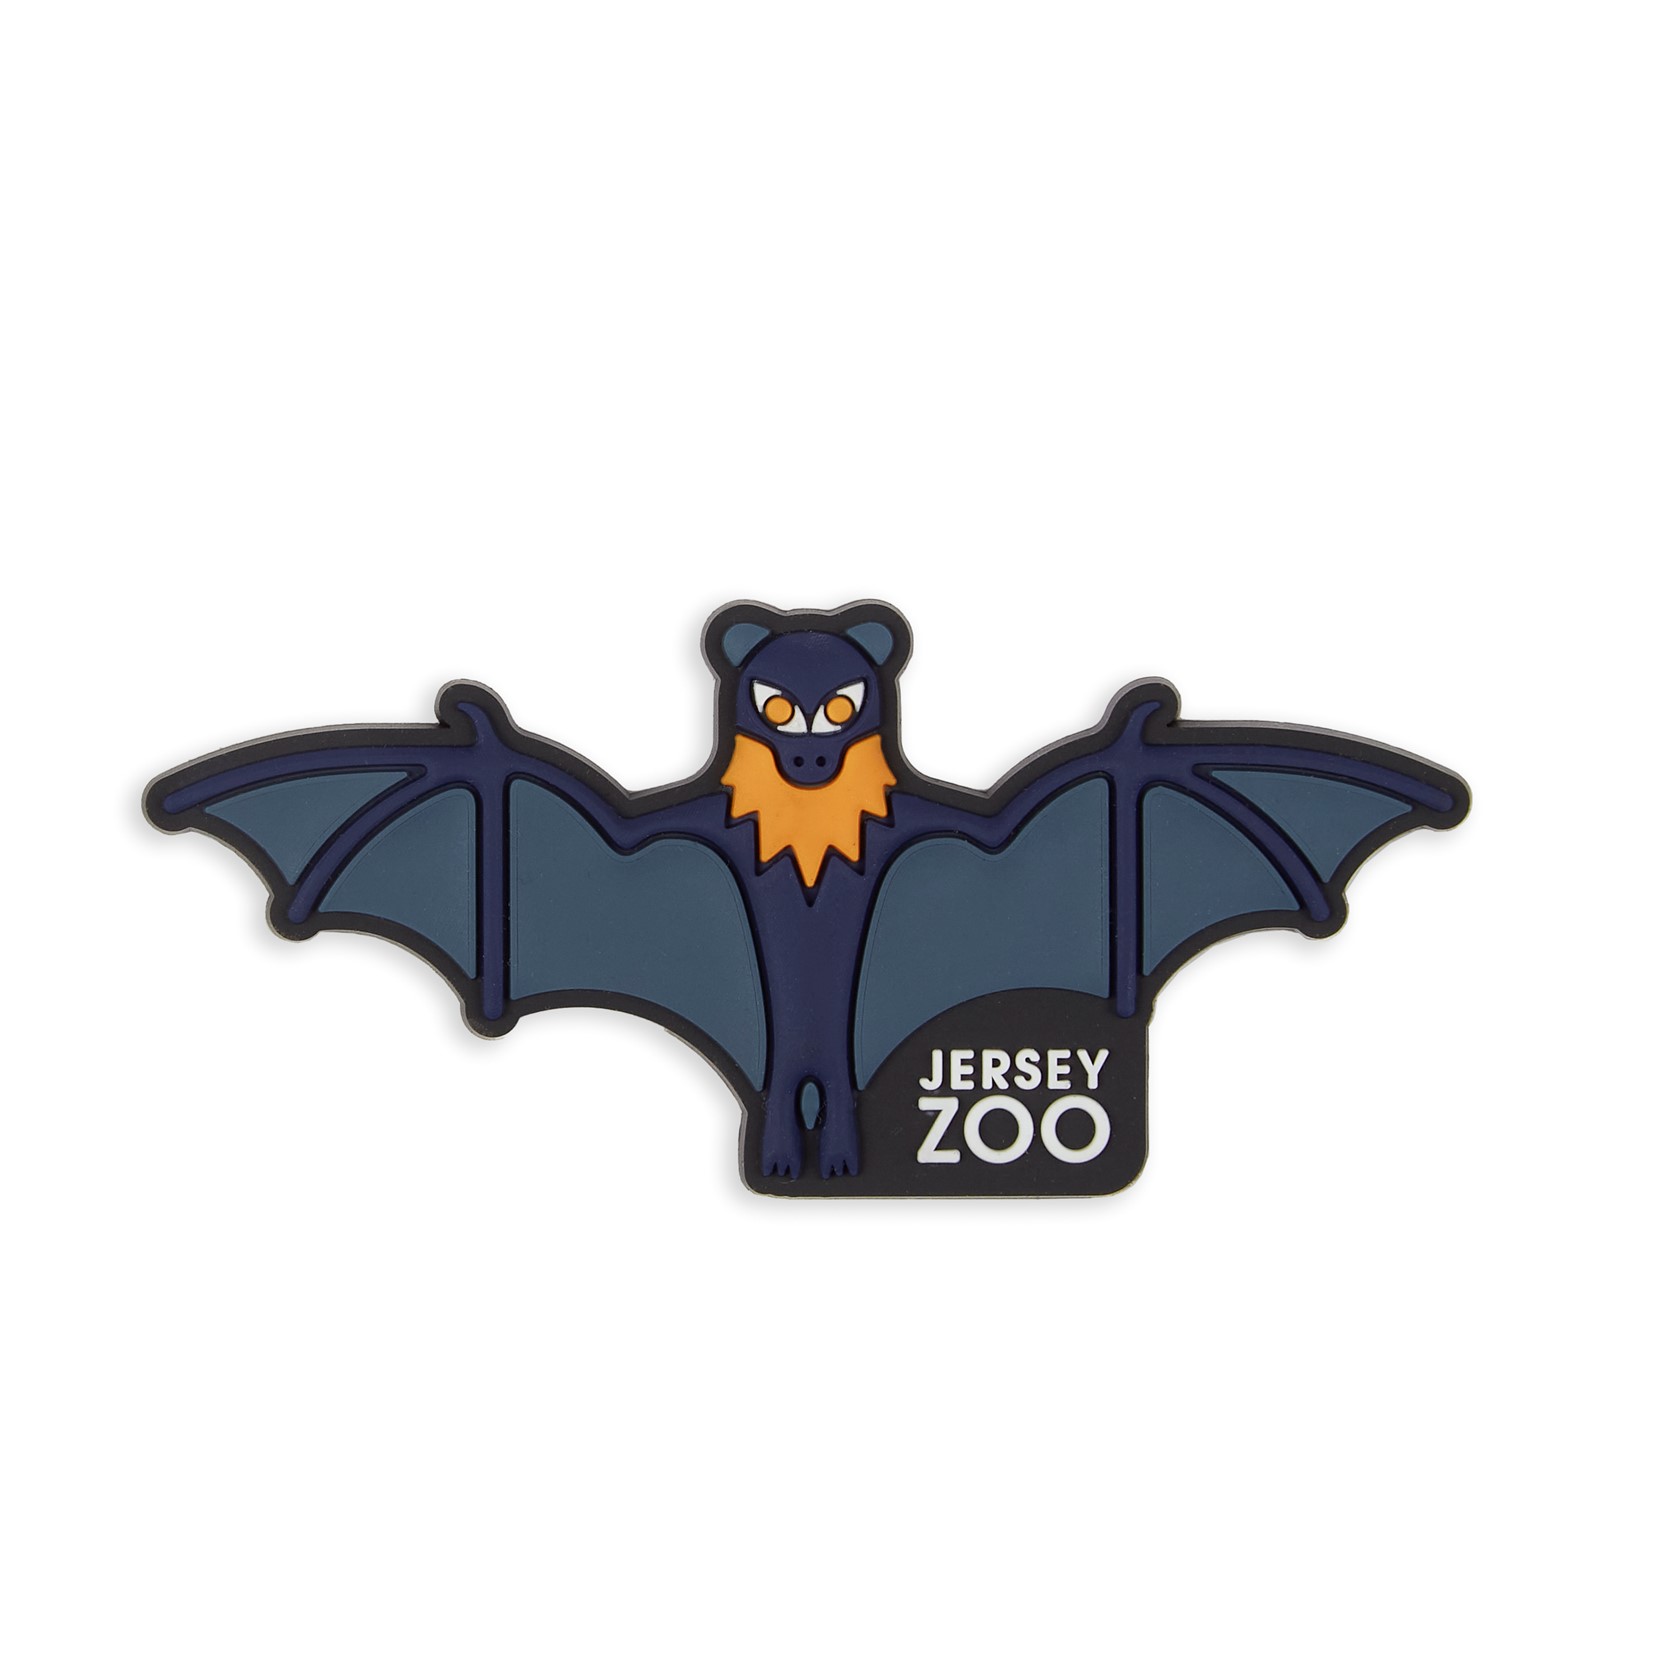 Jersey Zoo Soft PVC Bat Magnet